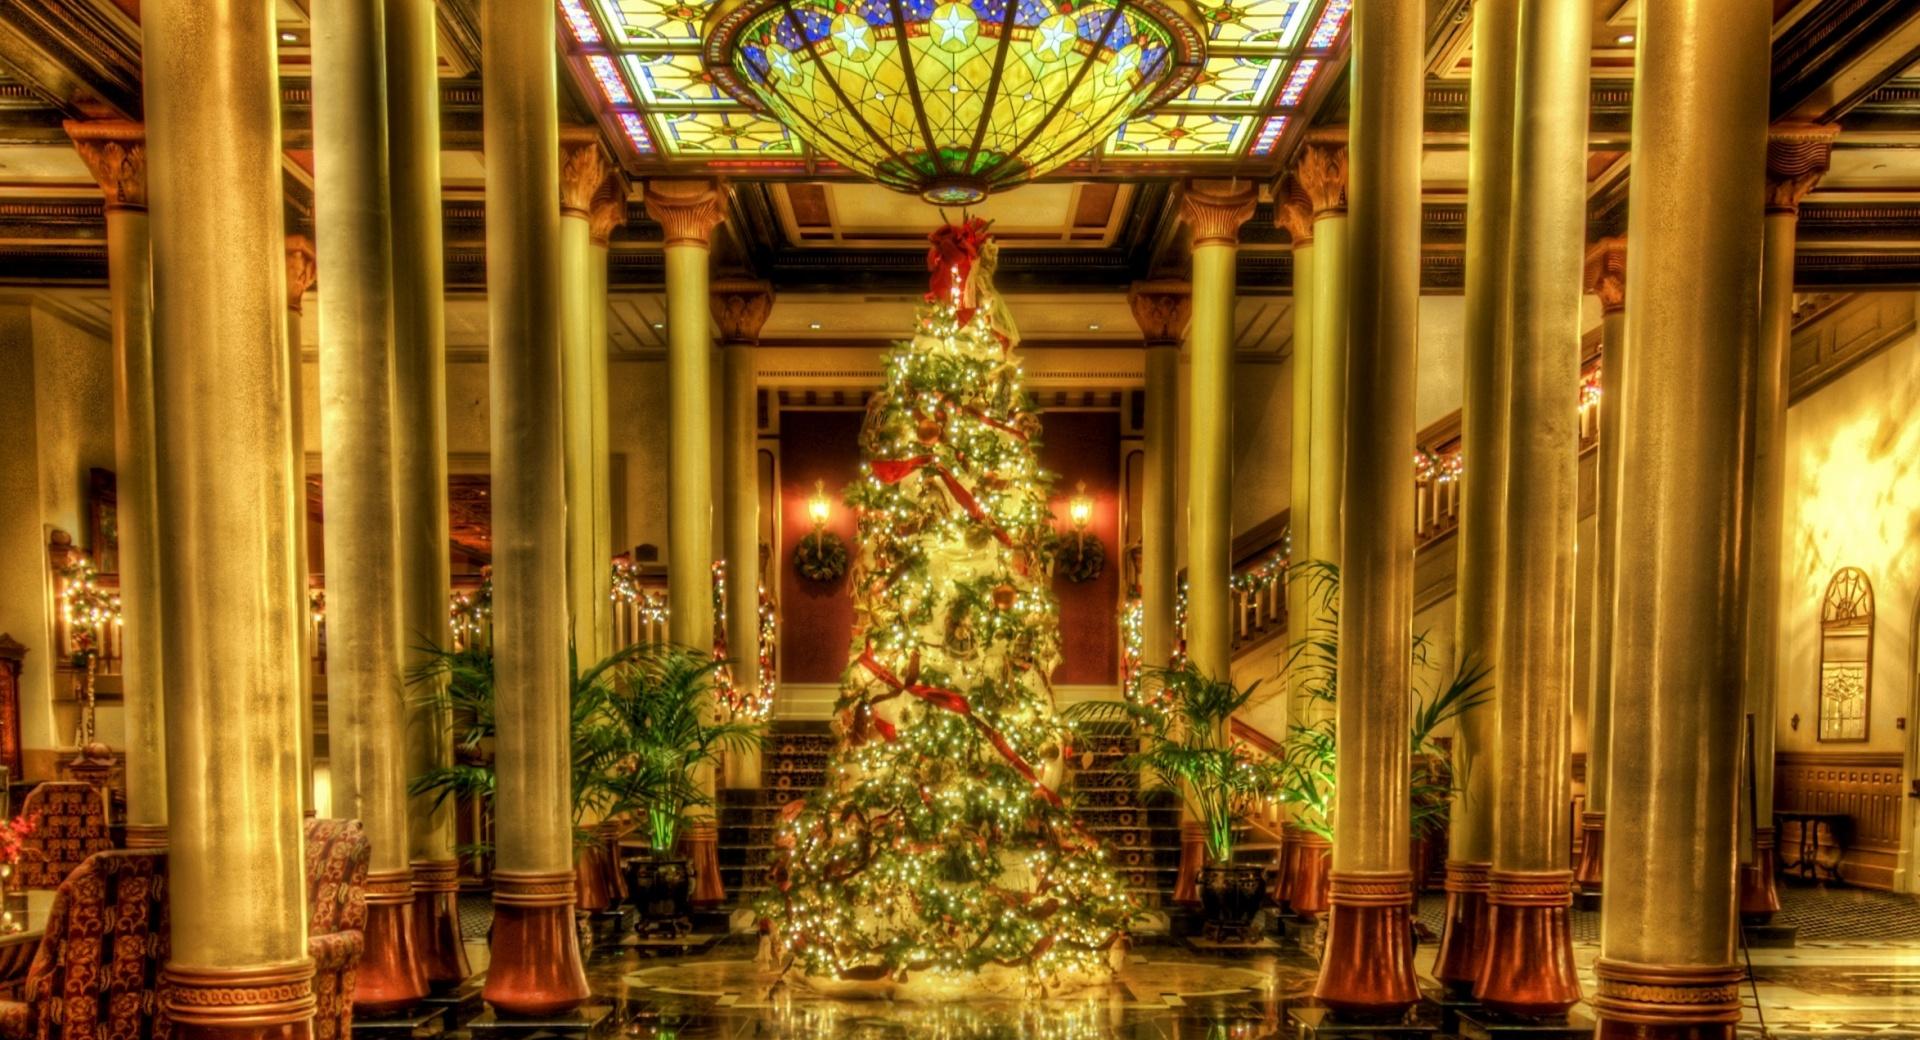 Christmas - Driskill Hotel Lobby, Texas at 1600 x 1200 size wallpapers HD quality